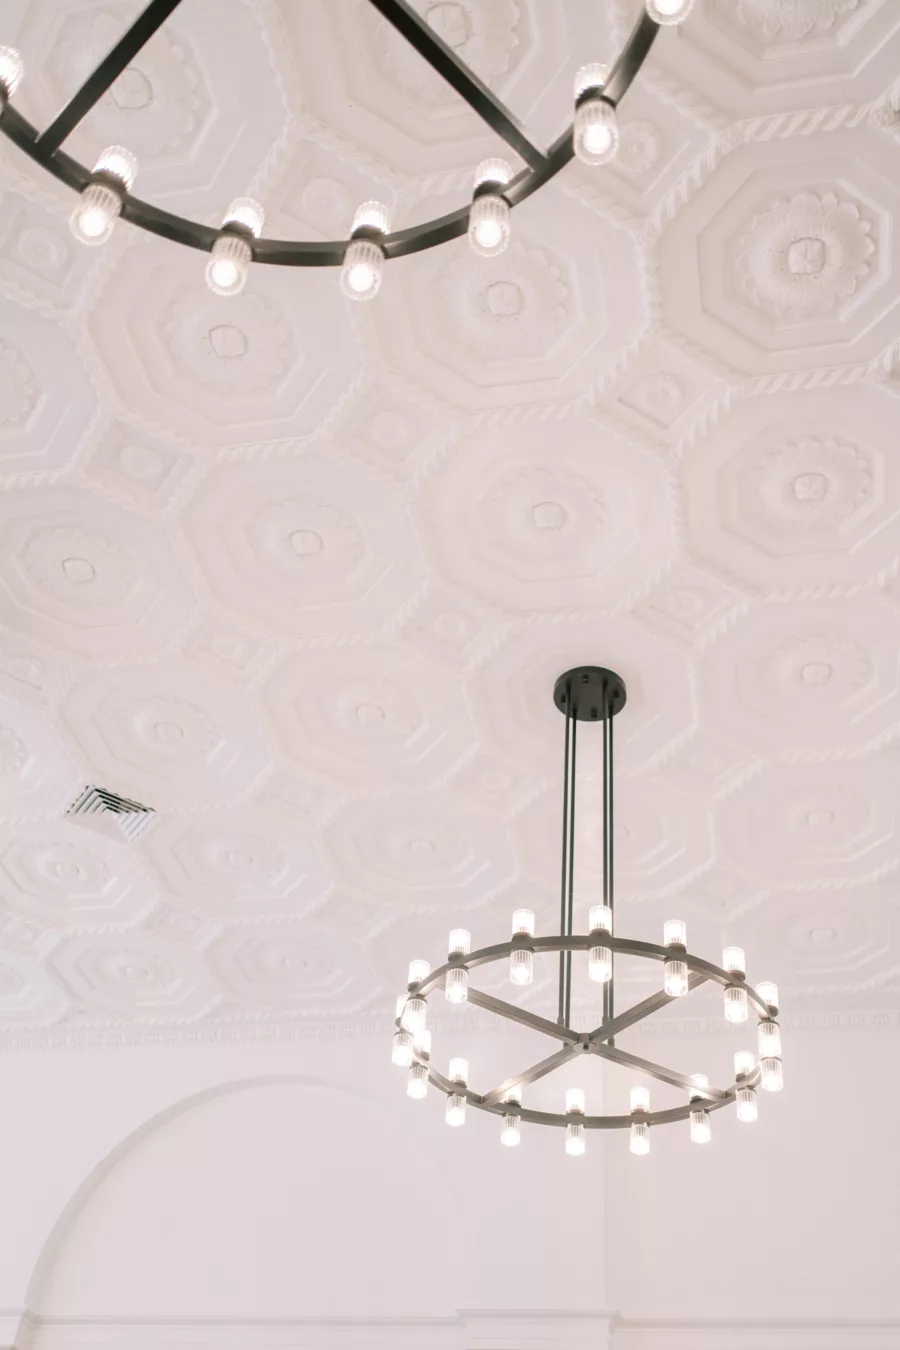 Modern Black Chandelier Lighting for Indoor Great Gatsby Wedding Ceremony | Tampa Bay Event Venue Hotel Flor